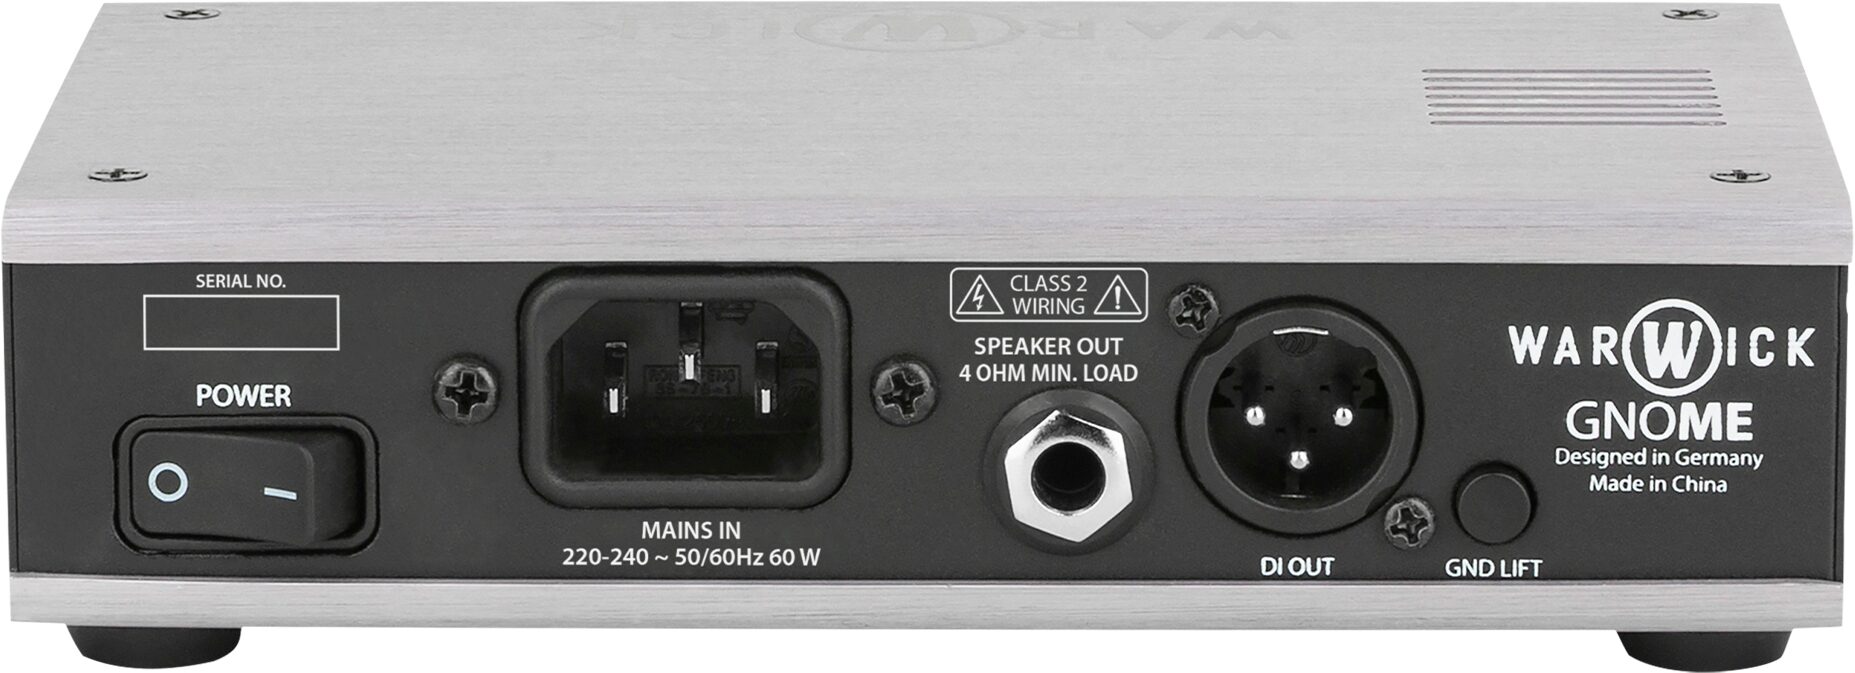 Warwick Gnome Pocket Bass Amplifier | zZounds